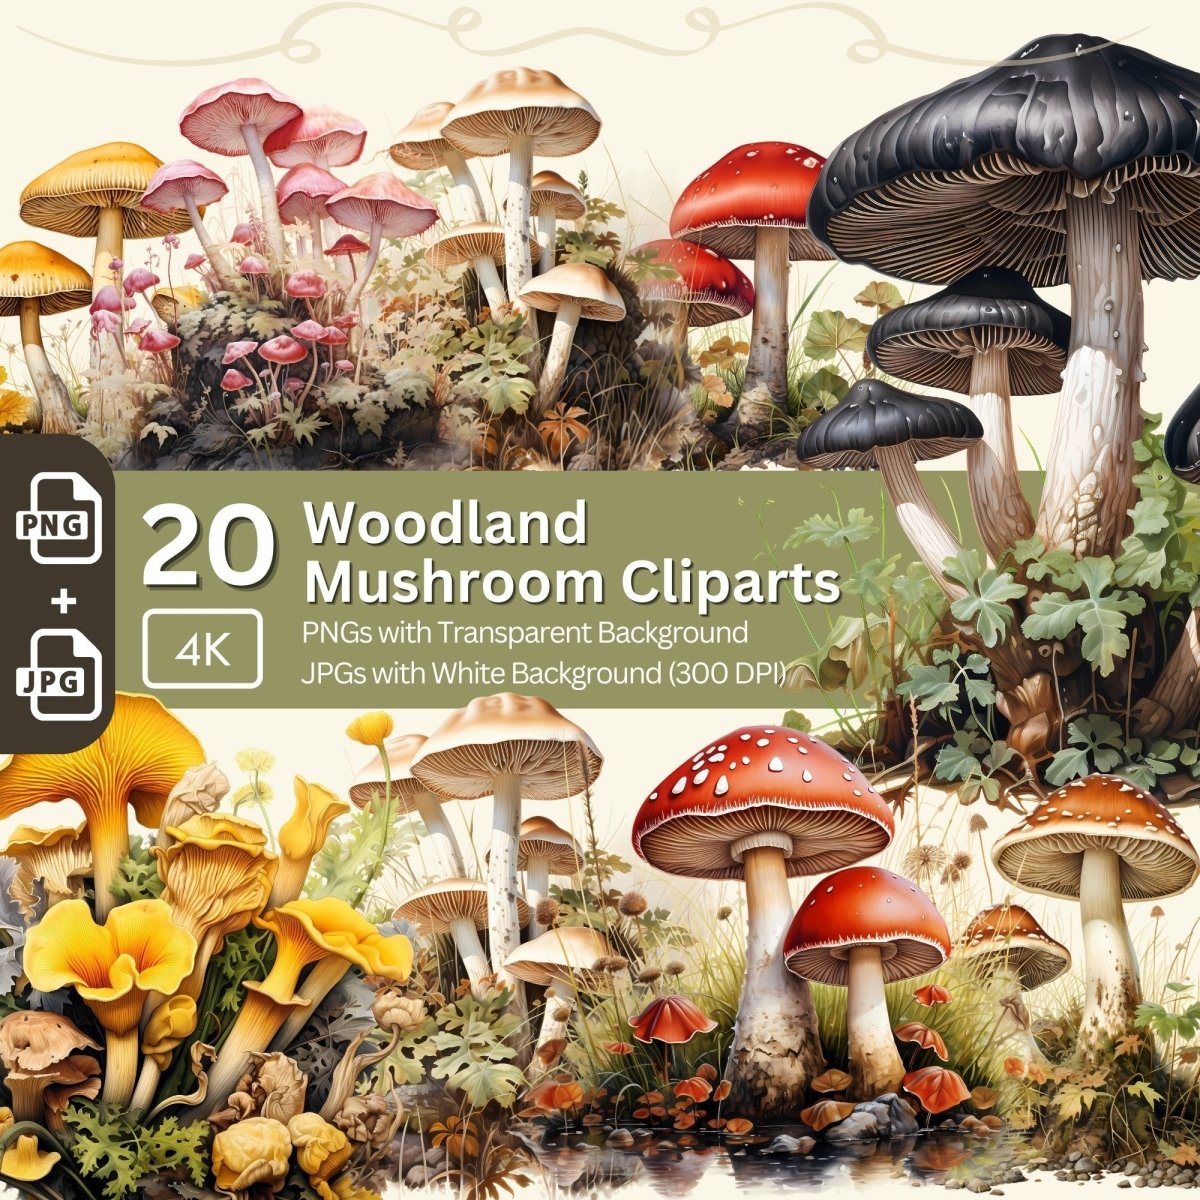 Mushroom Cliparts 20 PNG Bundle Woodland Mushroom Images Seasonal Toadstool Graphics Digital Paper Crafting Forest Junk Journal Kit - Everything Pixel